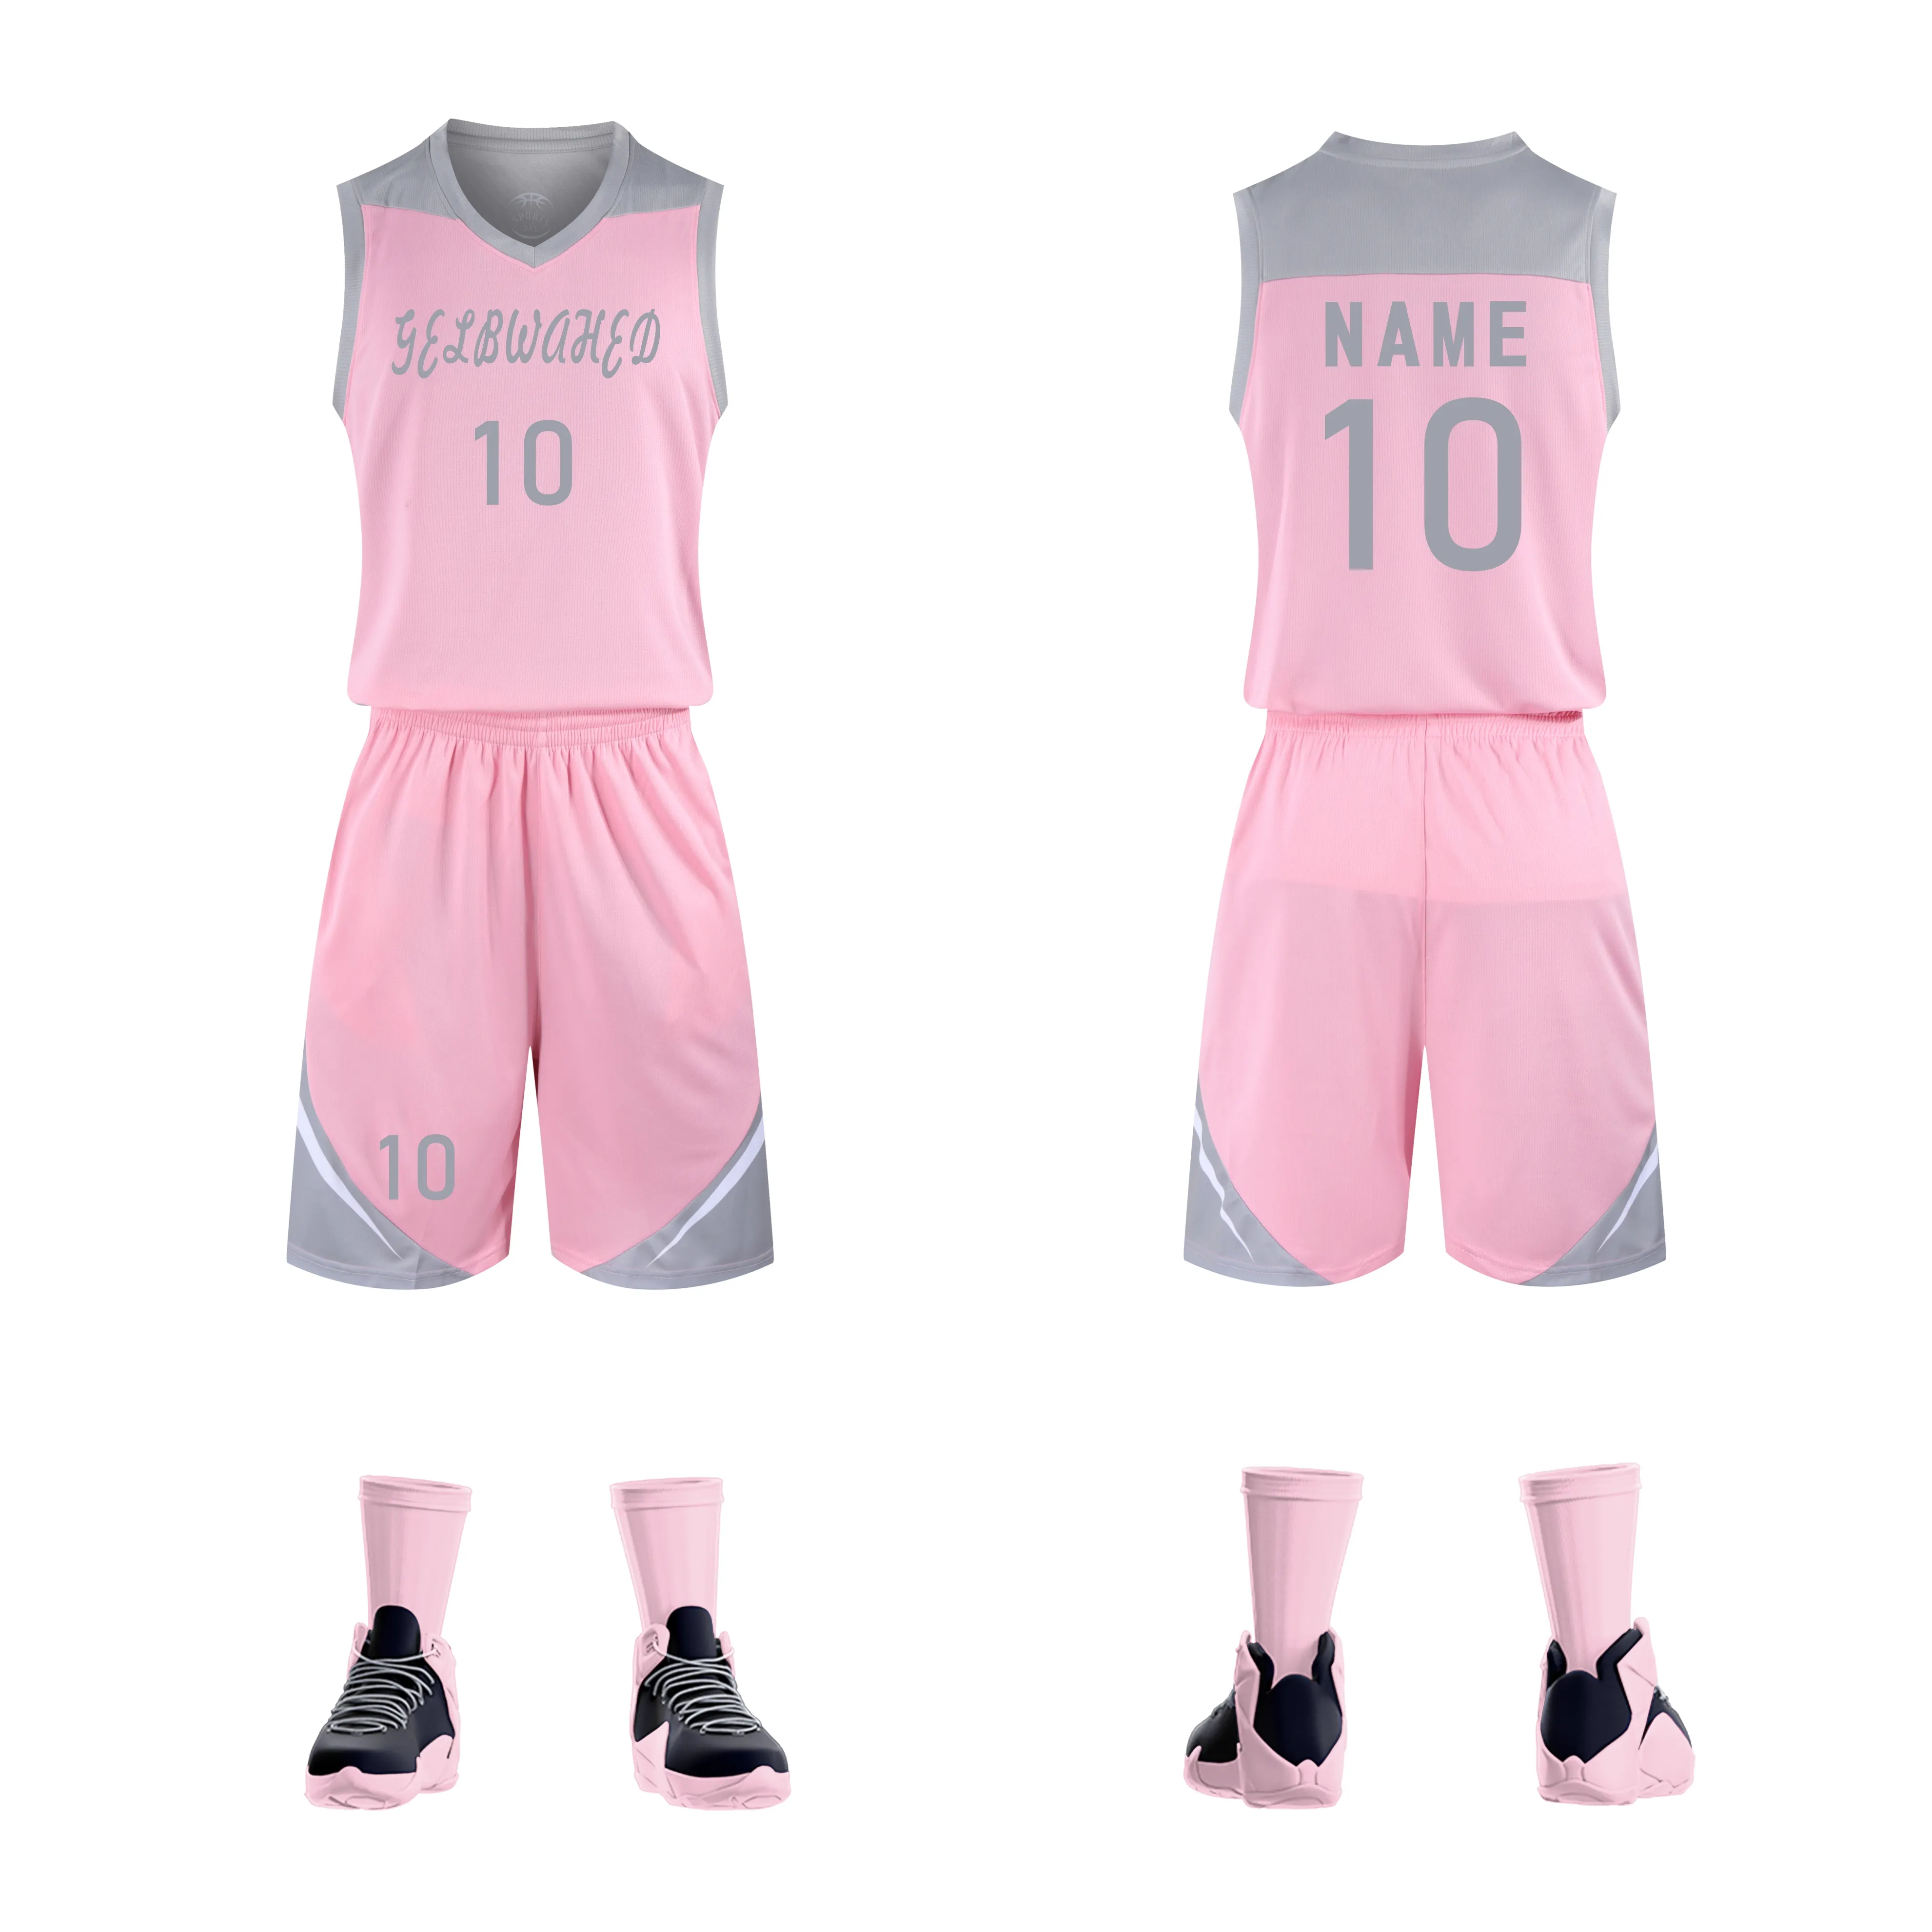 Hot selling men's basketball jerseys pink basketball jerseys net basketball sets